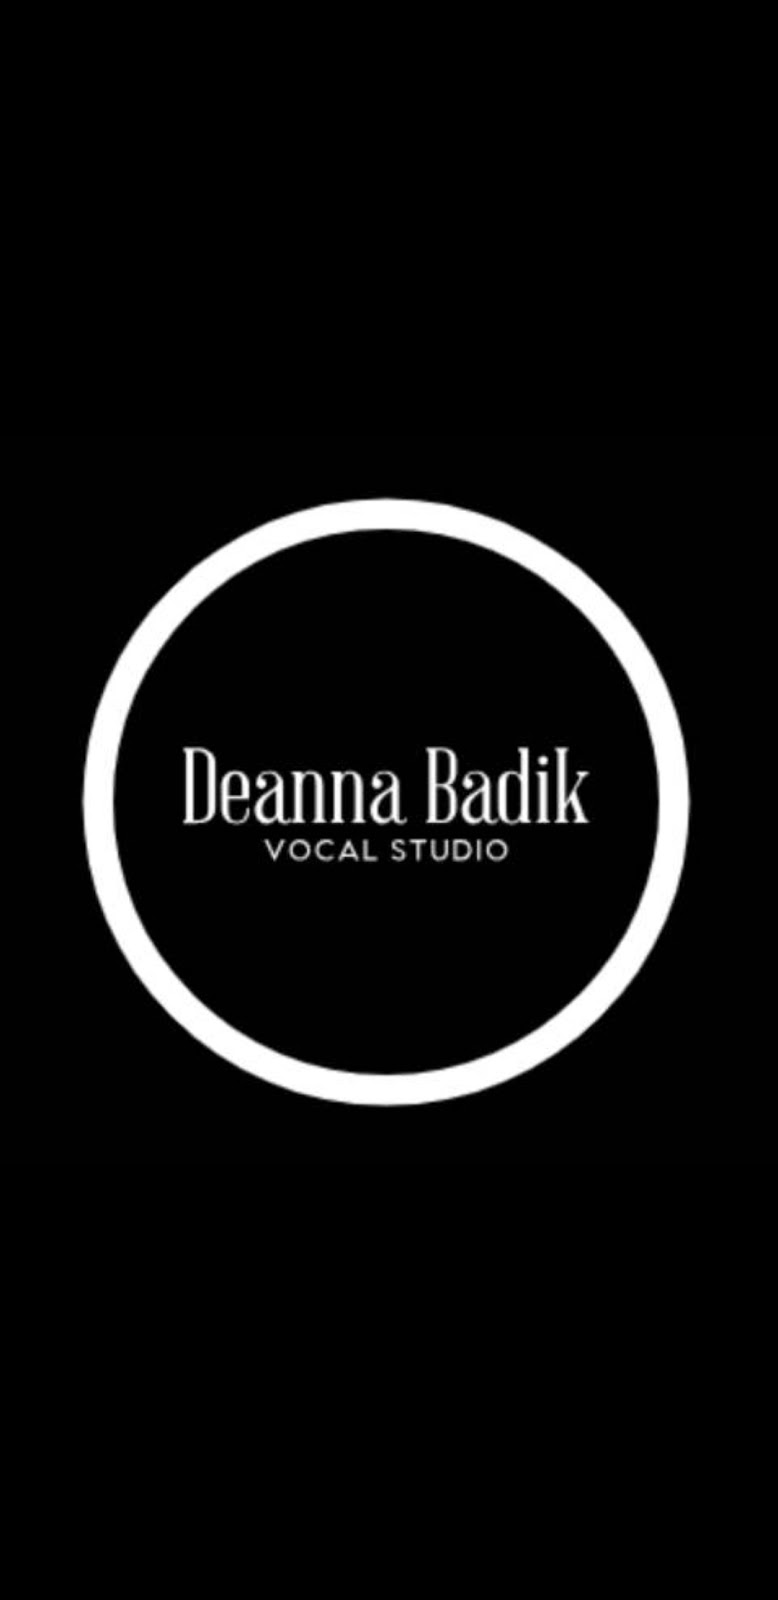 Deanna Badik Vocal Studio | Learn Rd, Tannersville, PA 18372 | Phone: (570) 236-4603